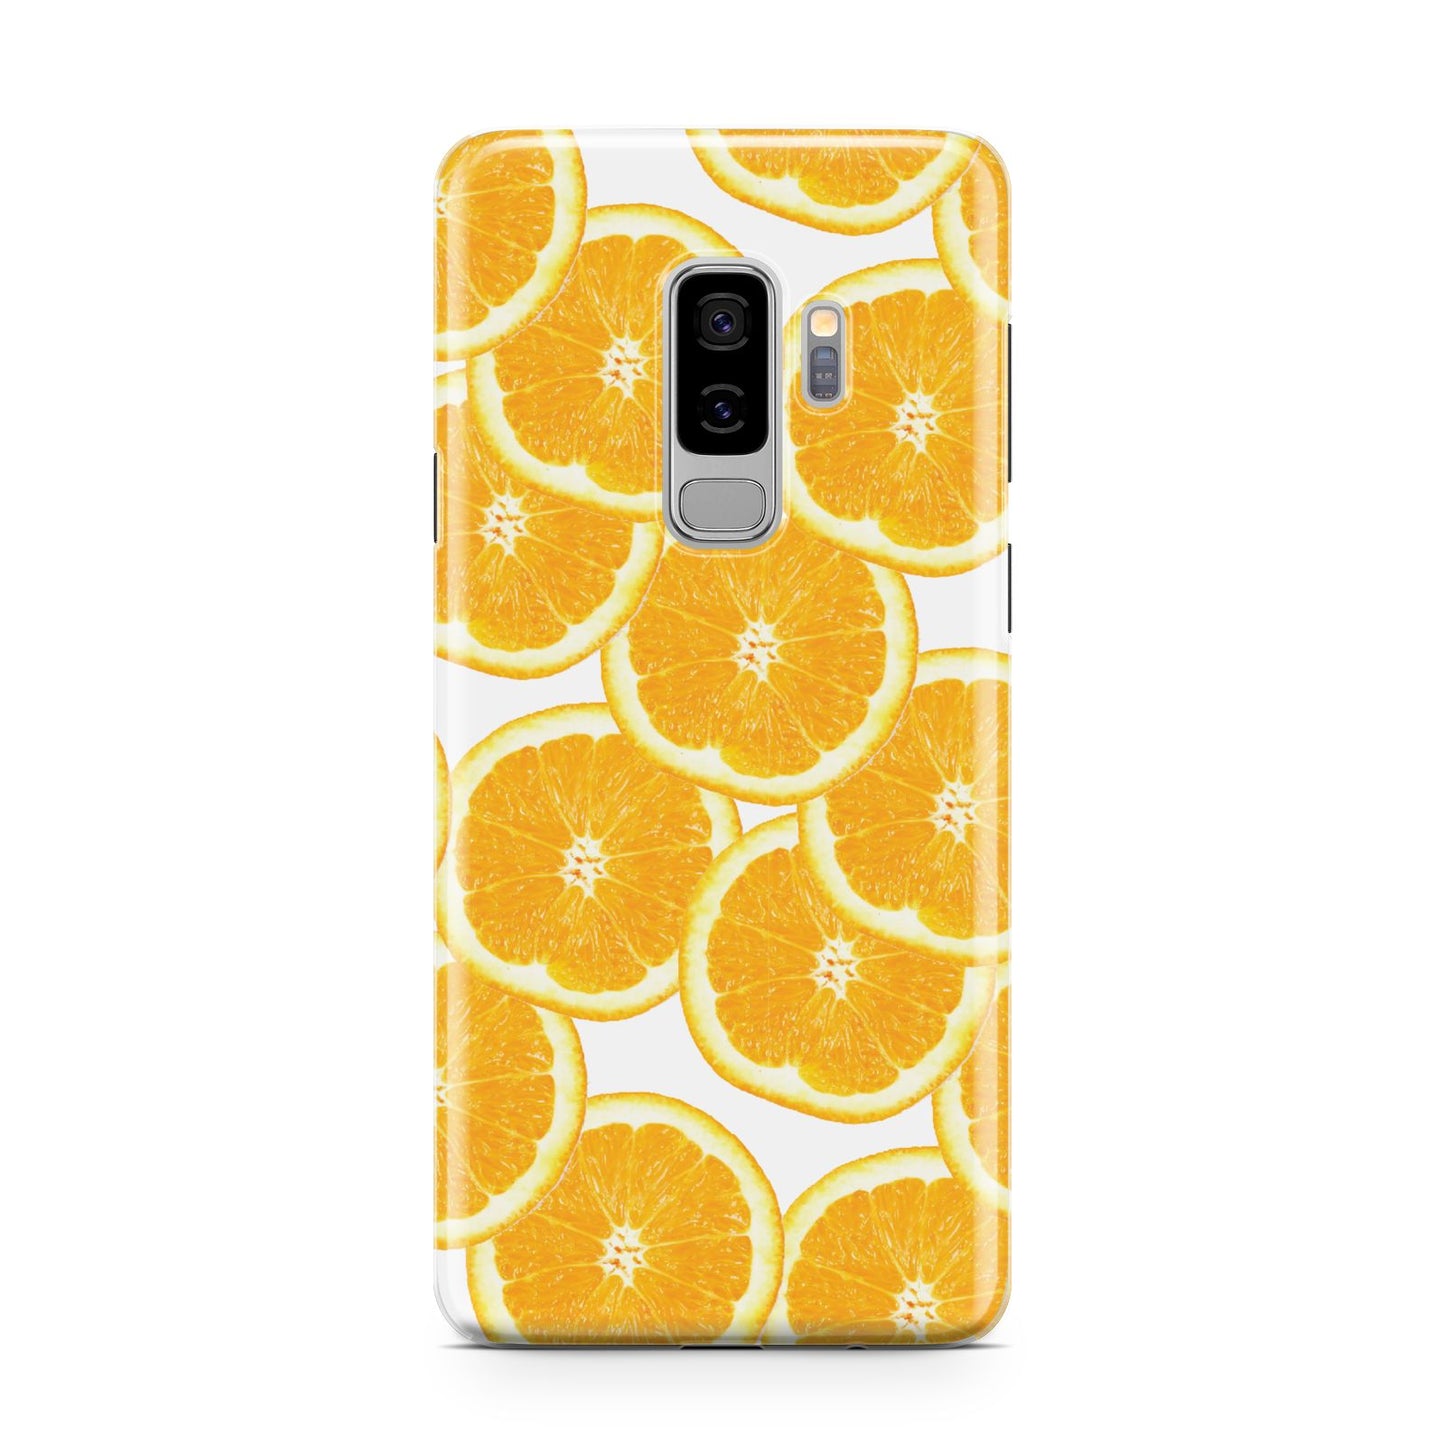 Orange Fruit Slices Samsung Galaxy S9 Plus Case on Silver phone